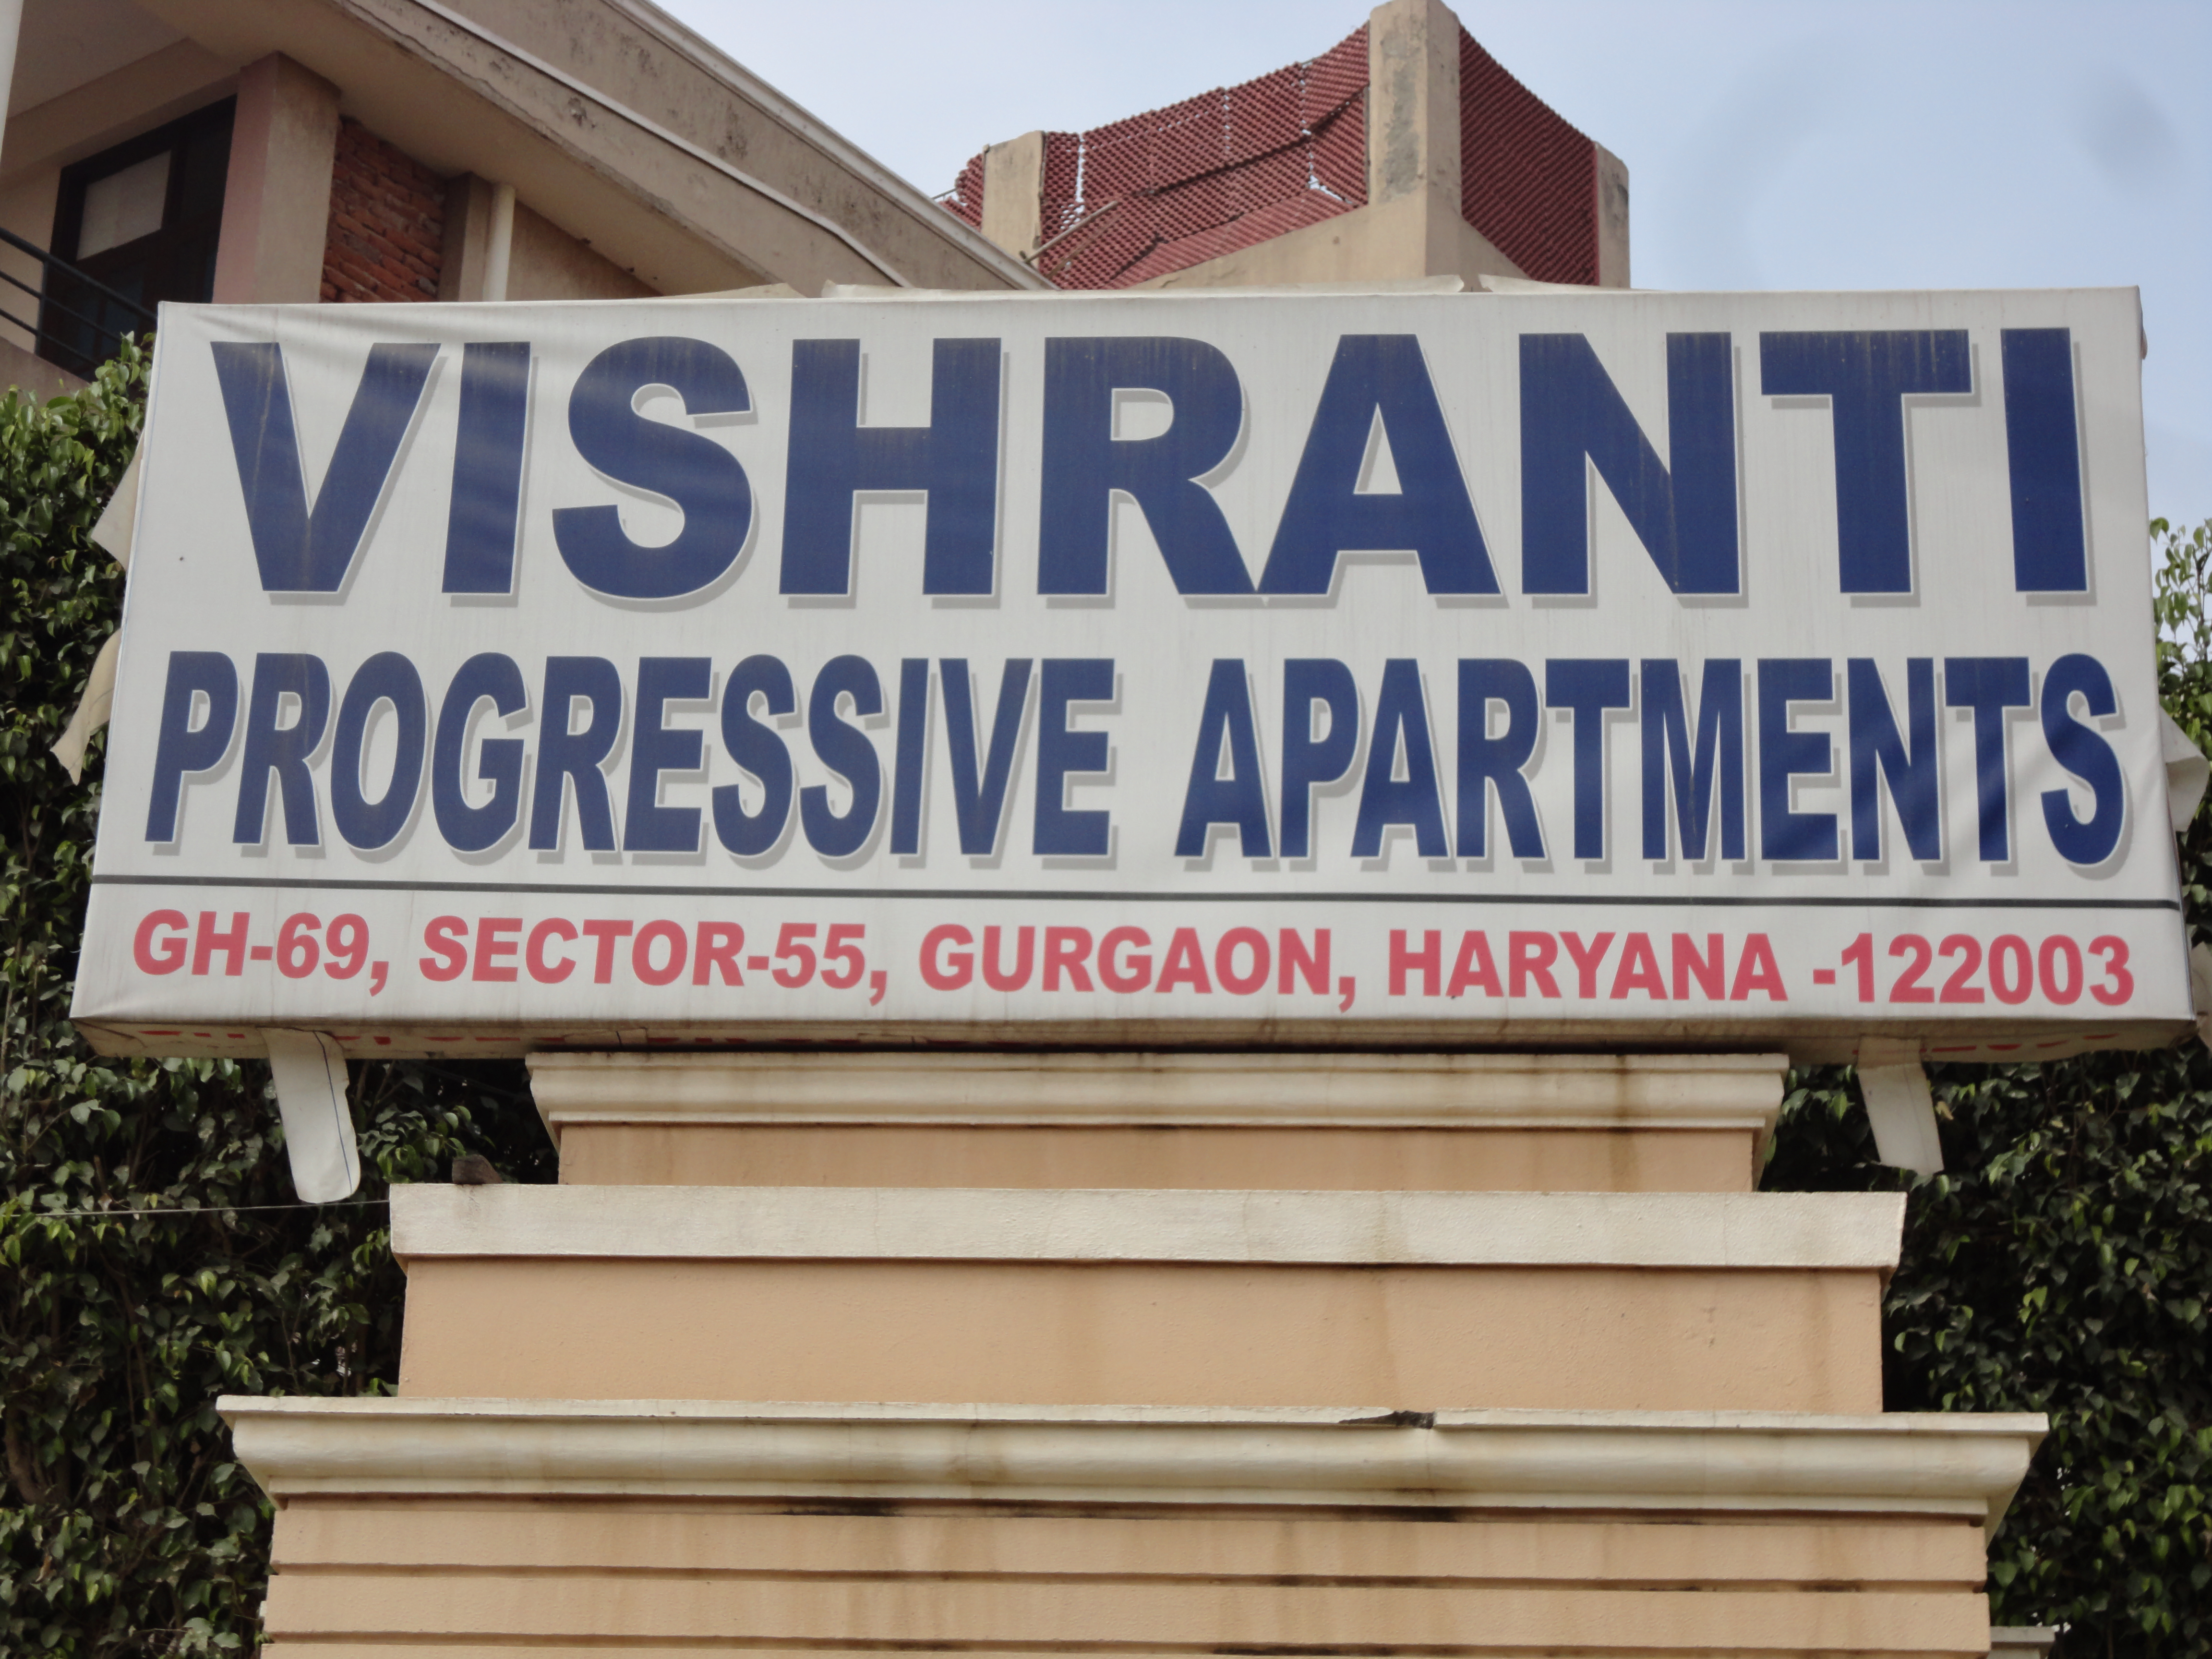 Vishranti Progressive Apartments CGHS